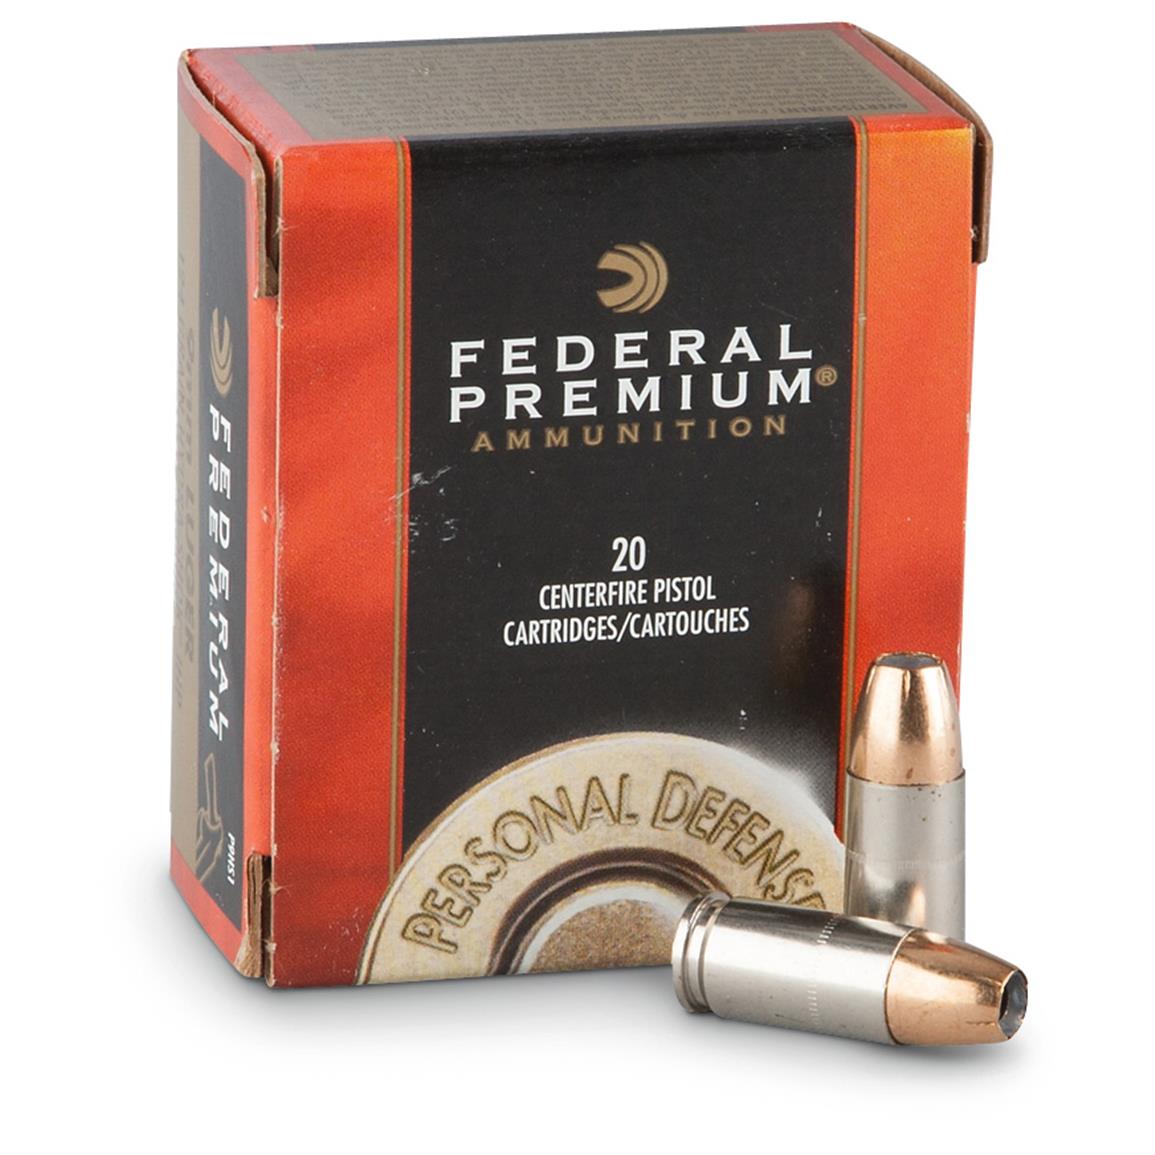 Federal Premium Personal Defense, 9mm, Hydra-Shok JHP, 124 Grain, 20 rounds